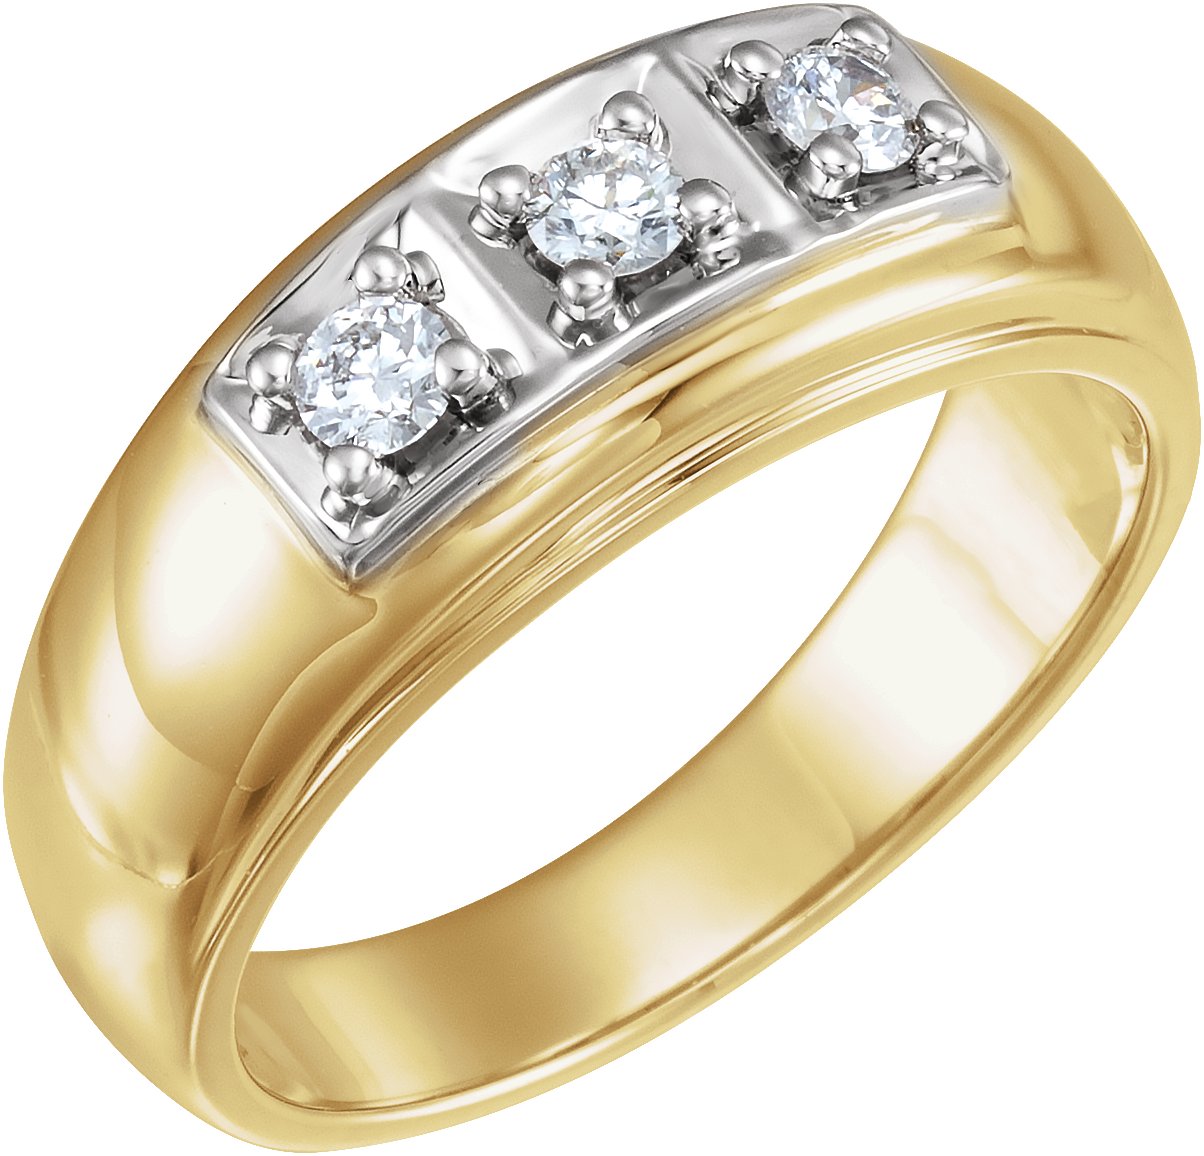 14K Yellow & White 1/3 CTW Diamond Ring